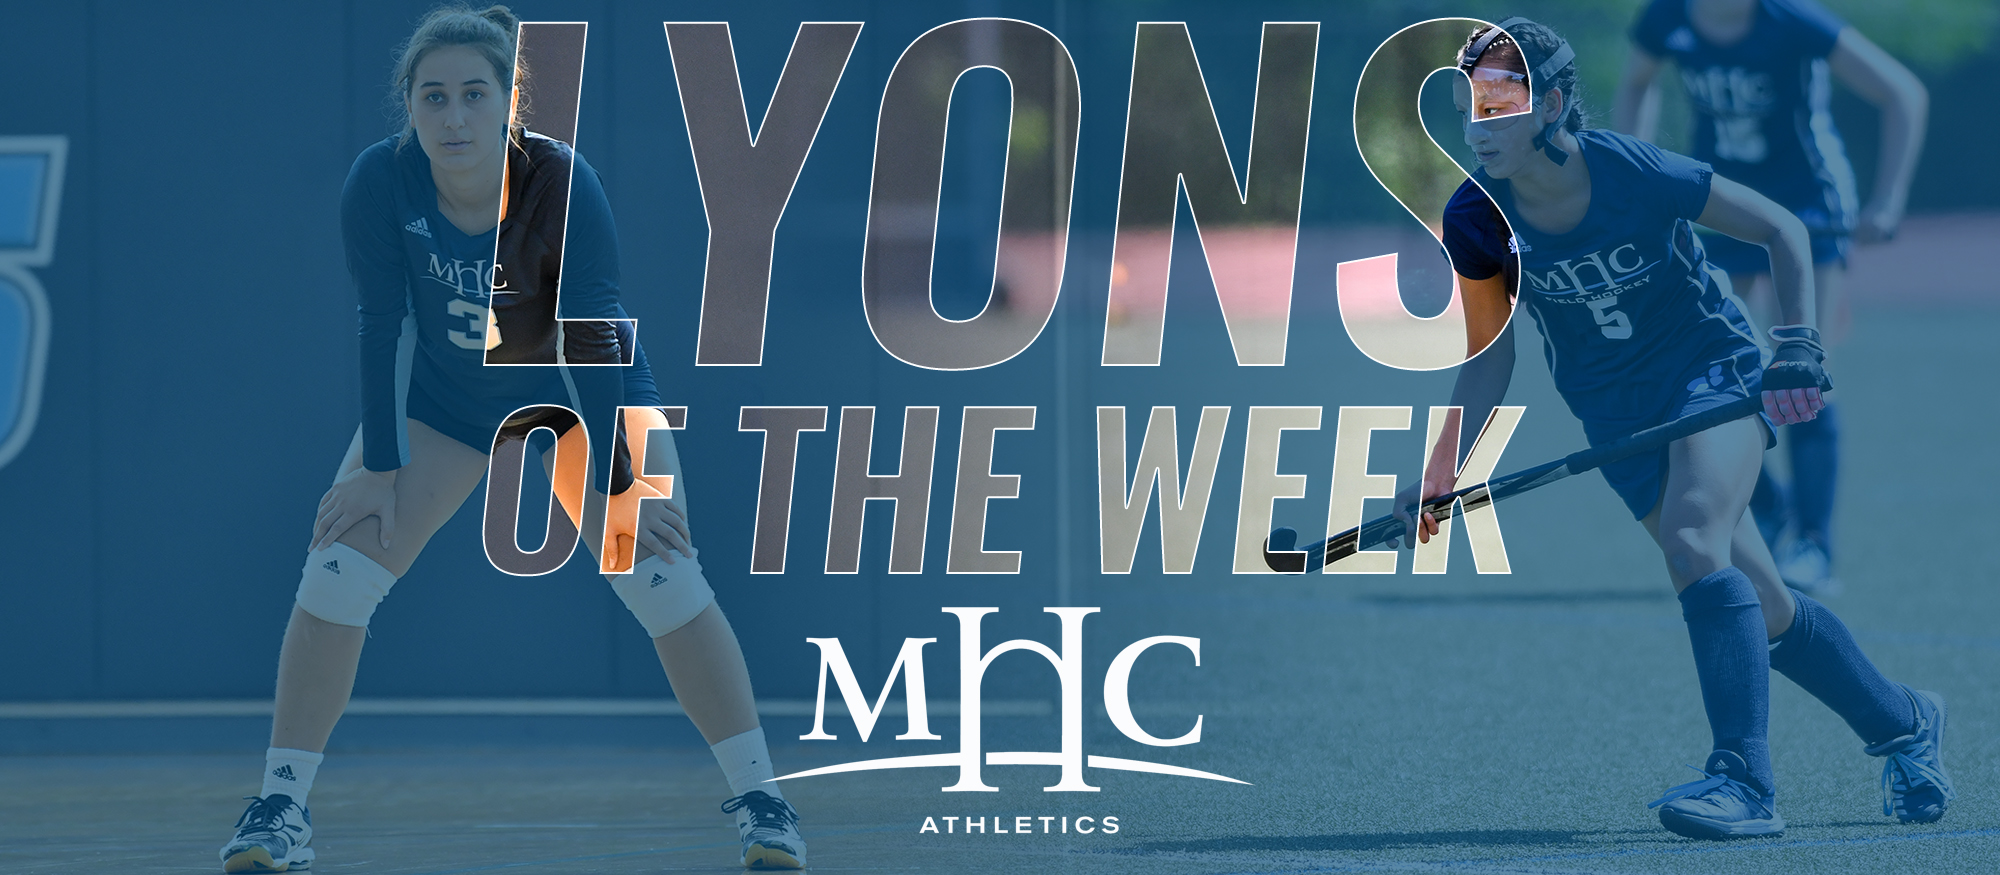 Robb and Galicia Named Mount Holyoke Athletics Lyons of the Week